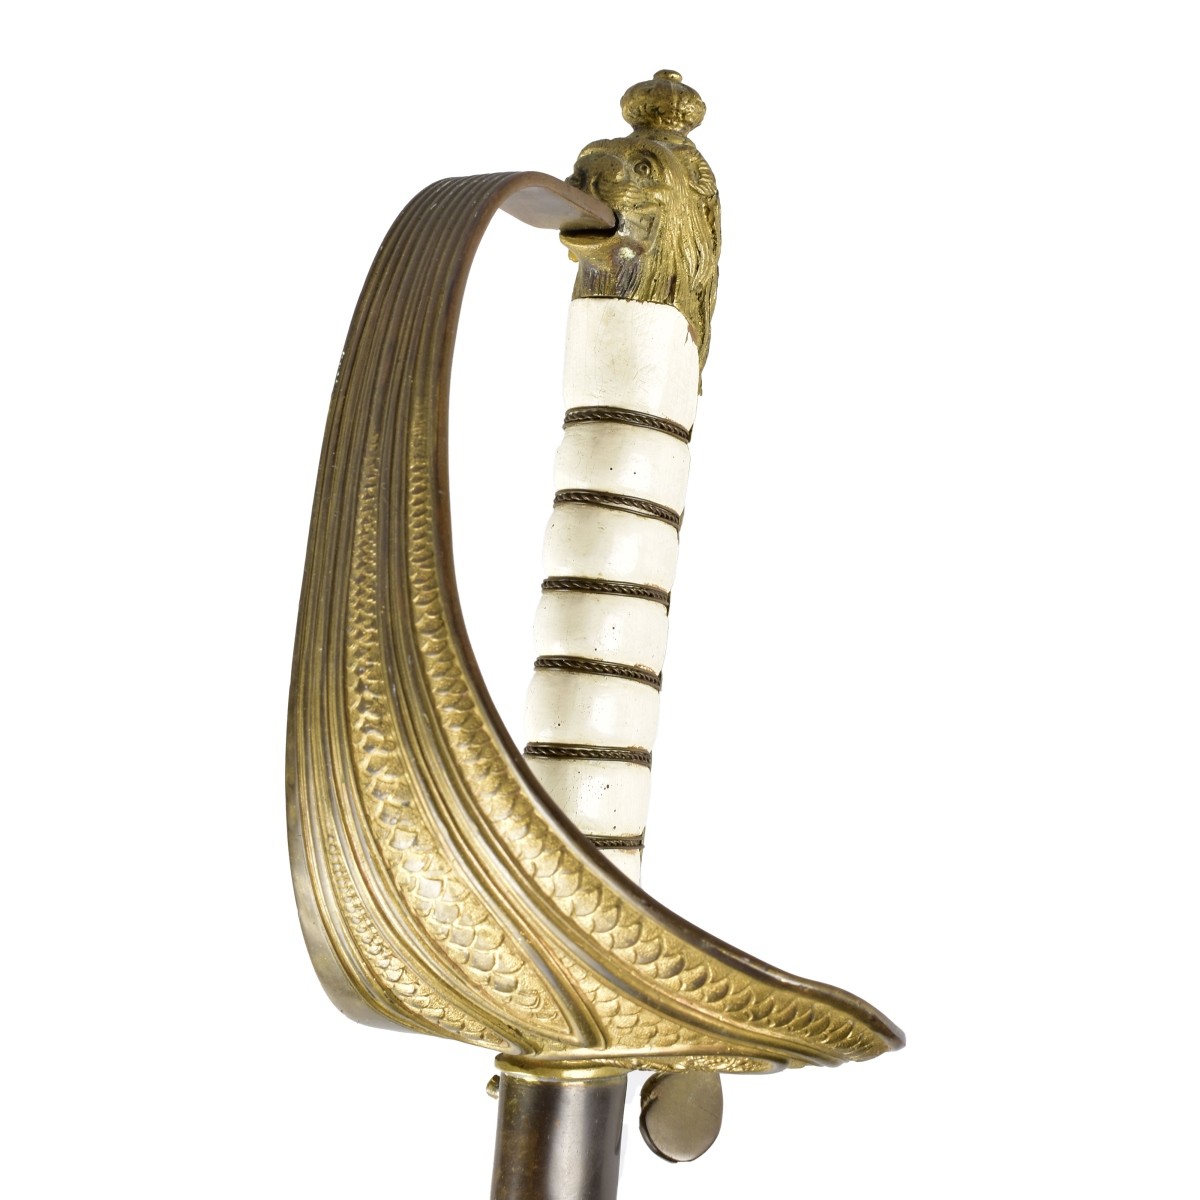 Antique George VI Royal Navy Officers Sword